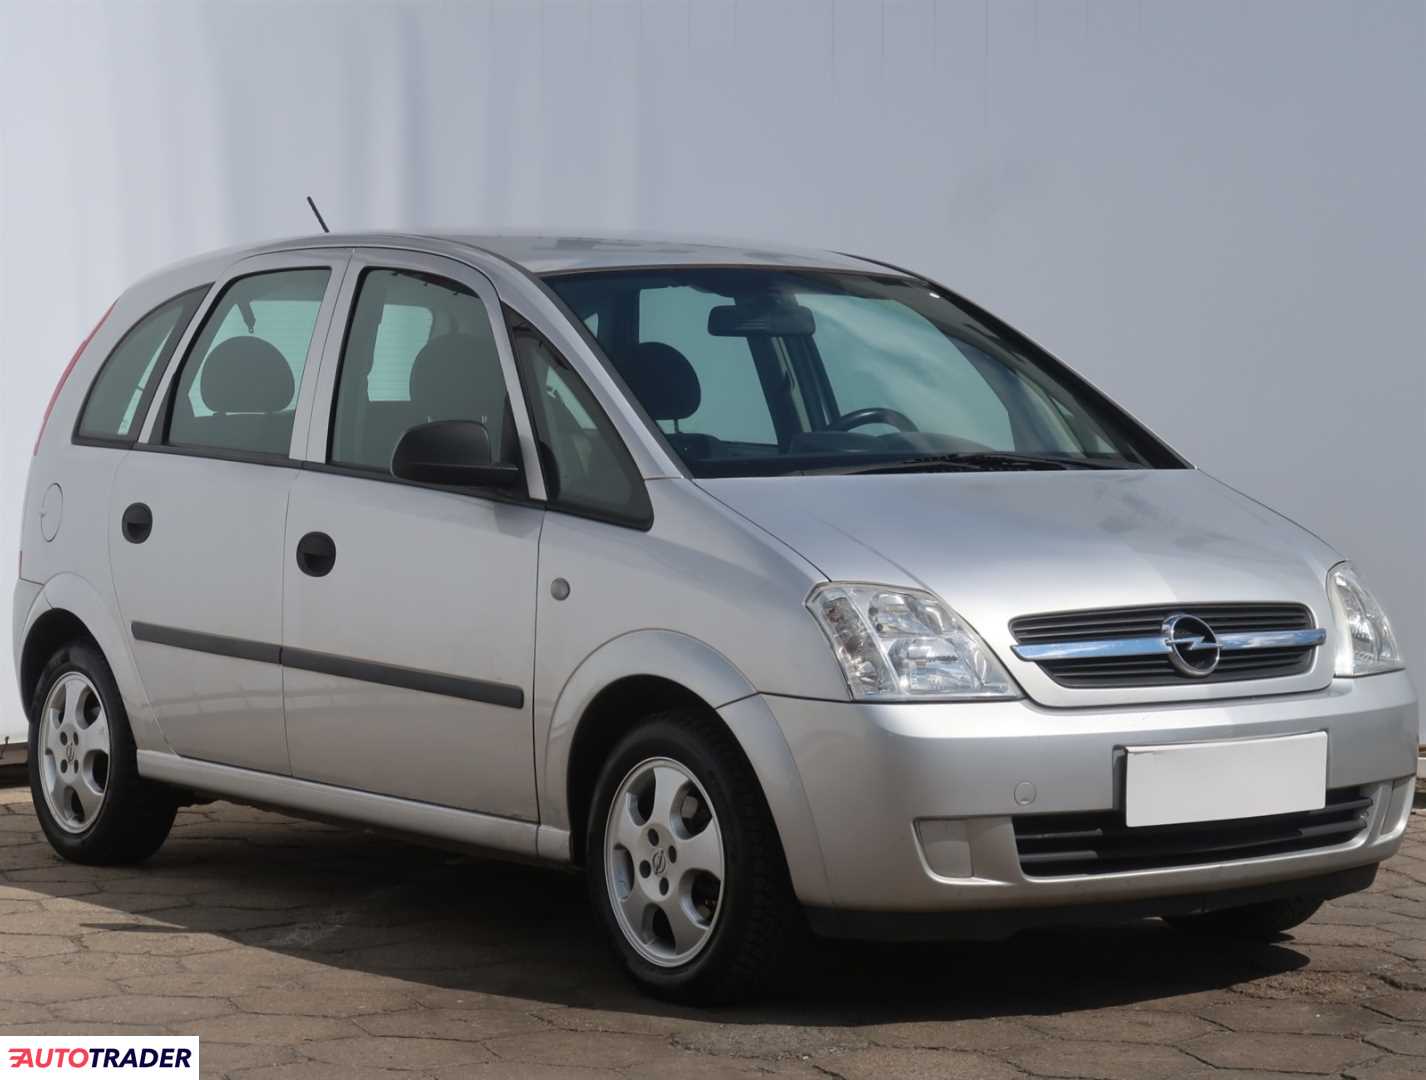 Opel Meriva 2003 1.6 85 KM